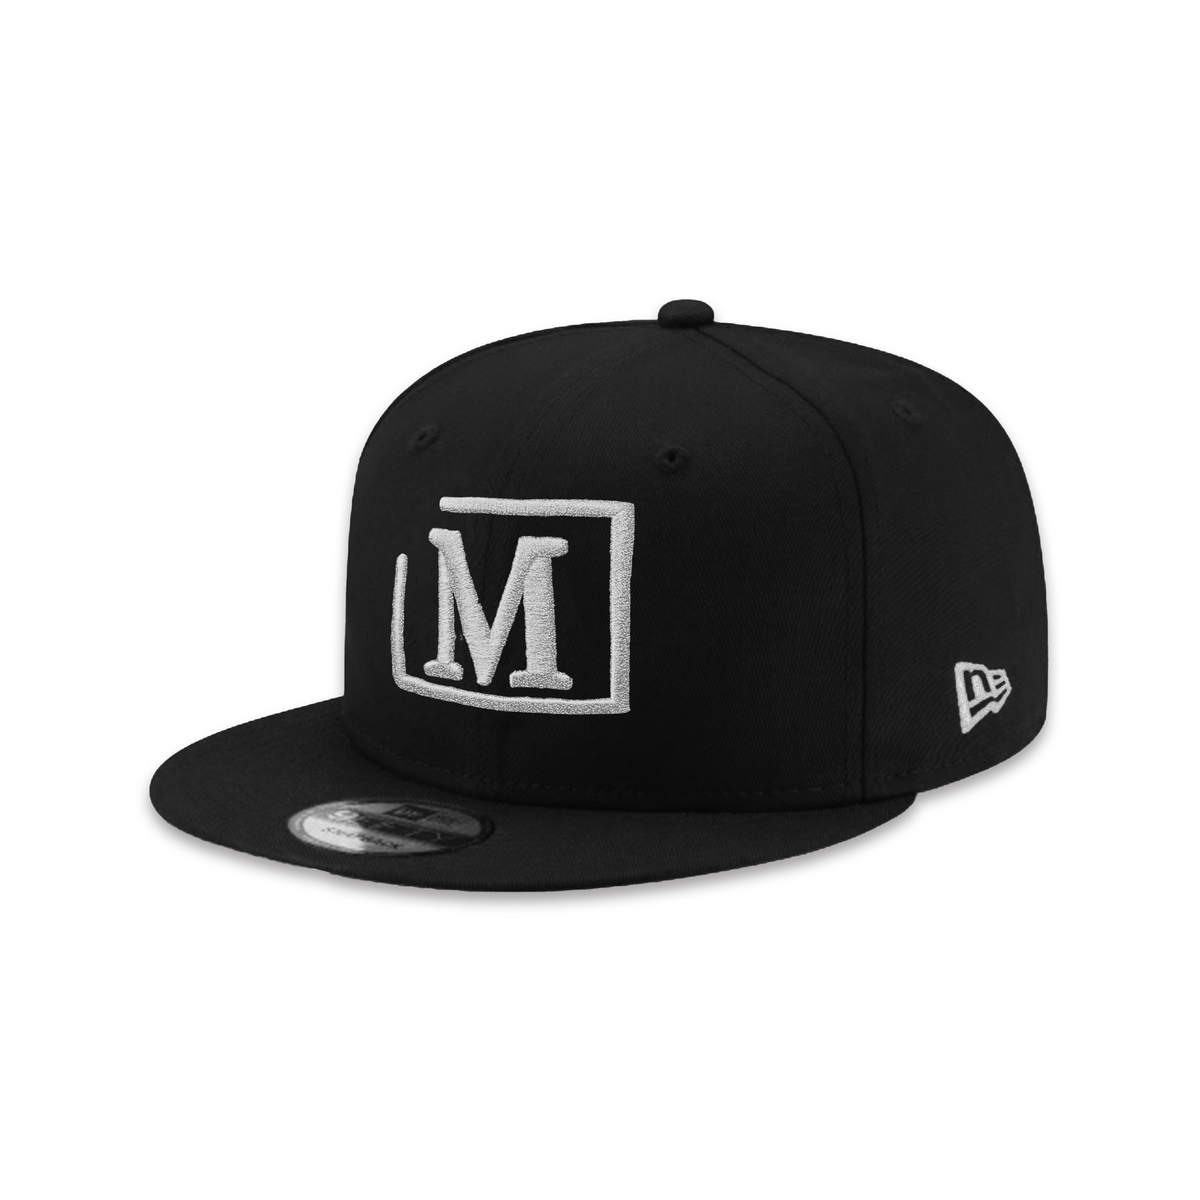 MDB Brand x New Era 9Fifty Snapback Embroidered Baseball Cap - Black w/ Metallic Color